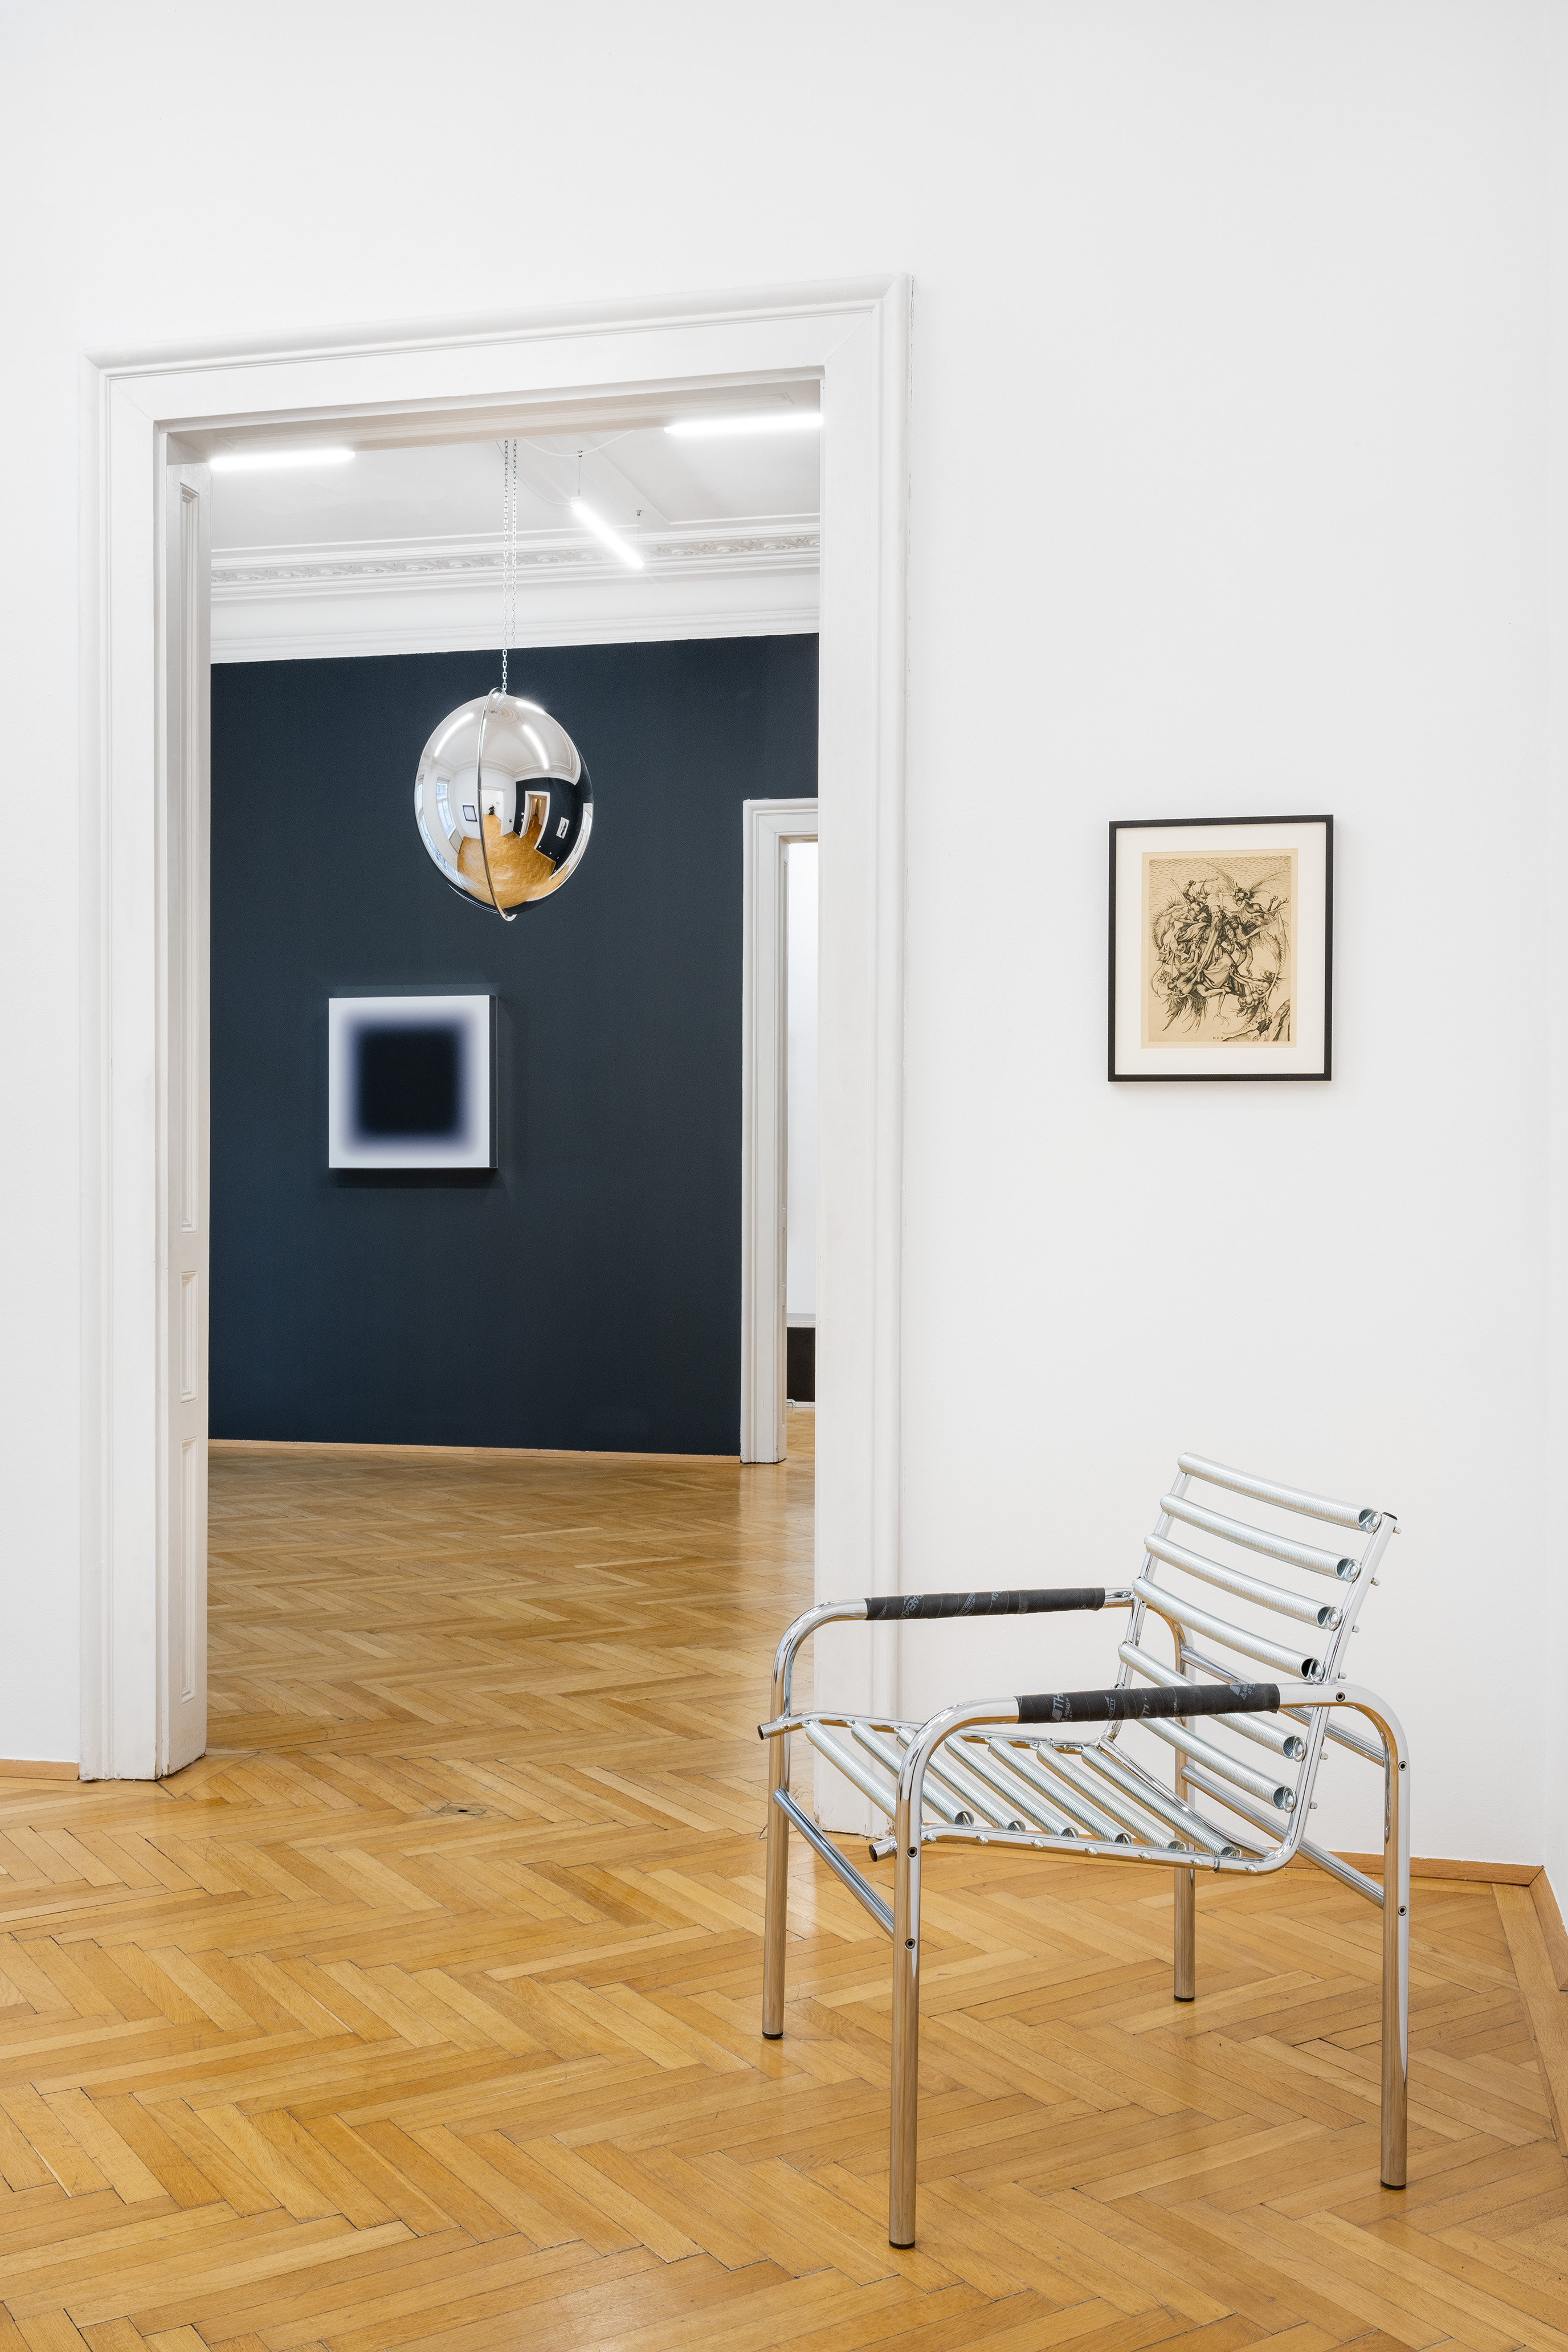 „Grit“ at Zeller van Almsick, Installation View, Jonny Niesche, Débora Delmar, Sophie Hirsch, Martin Schongauer, 2024